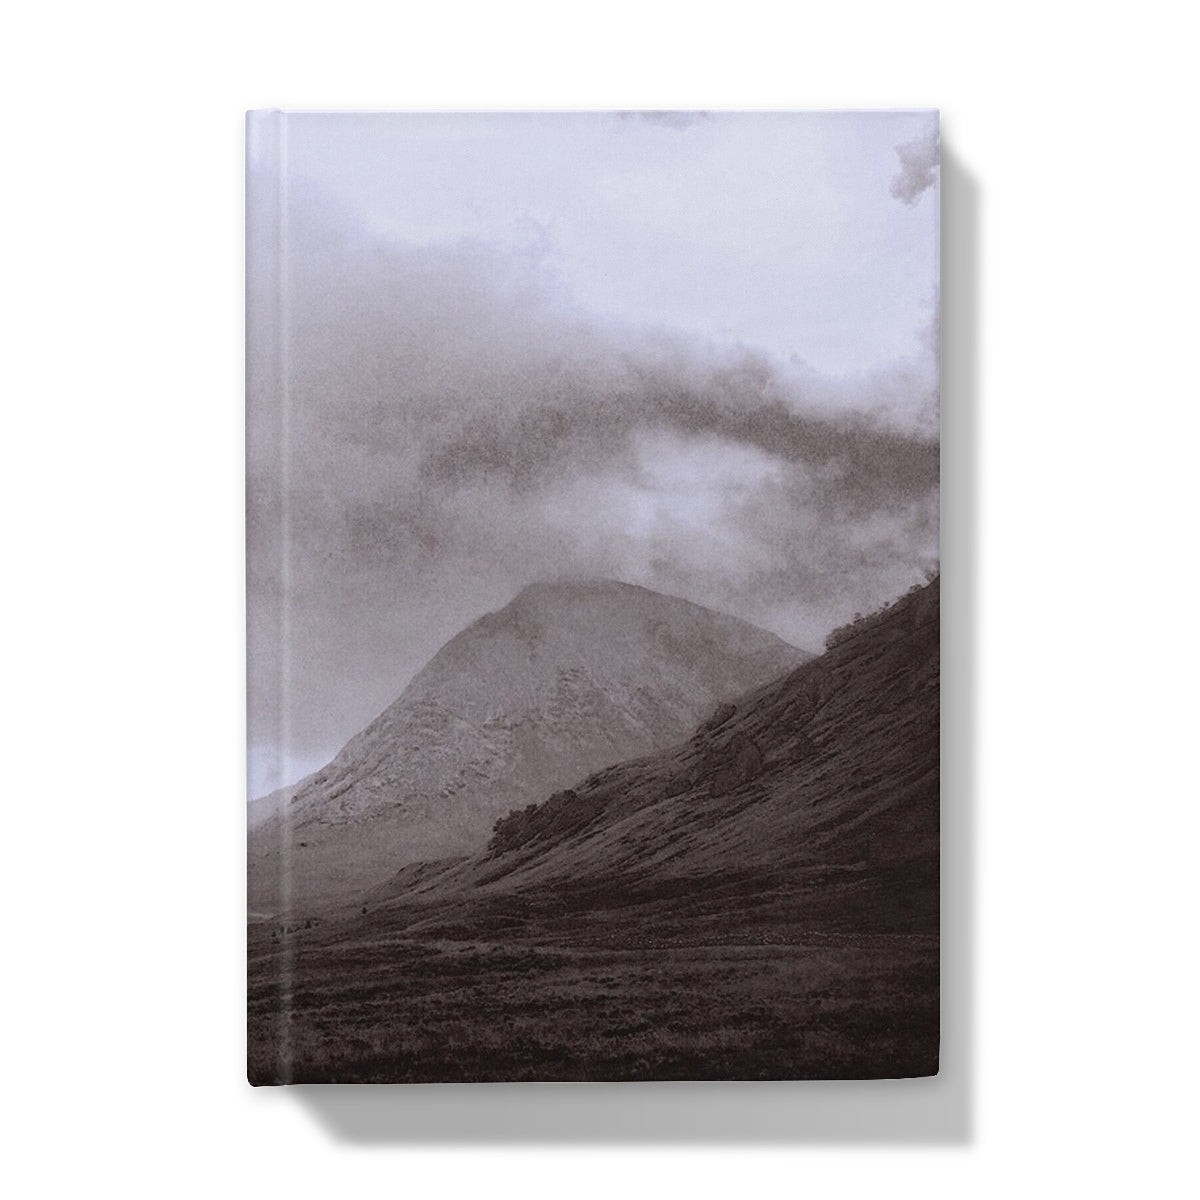 Glencoe Mist Art Gifts Hardback Journal-Journals & Notebooks-Glencoe Art Gallery-5"x7"-Plain-Paintings, Prints, Homeware, Art Gifts From Scotland By Scottish Artist Kevin Hunter